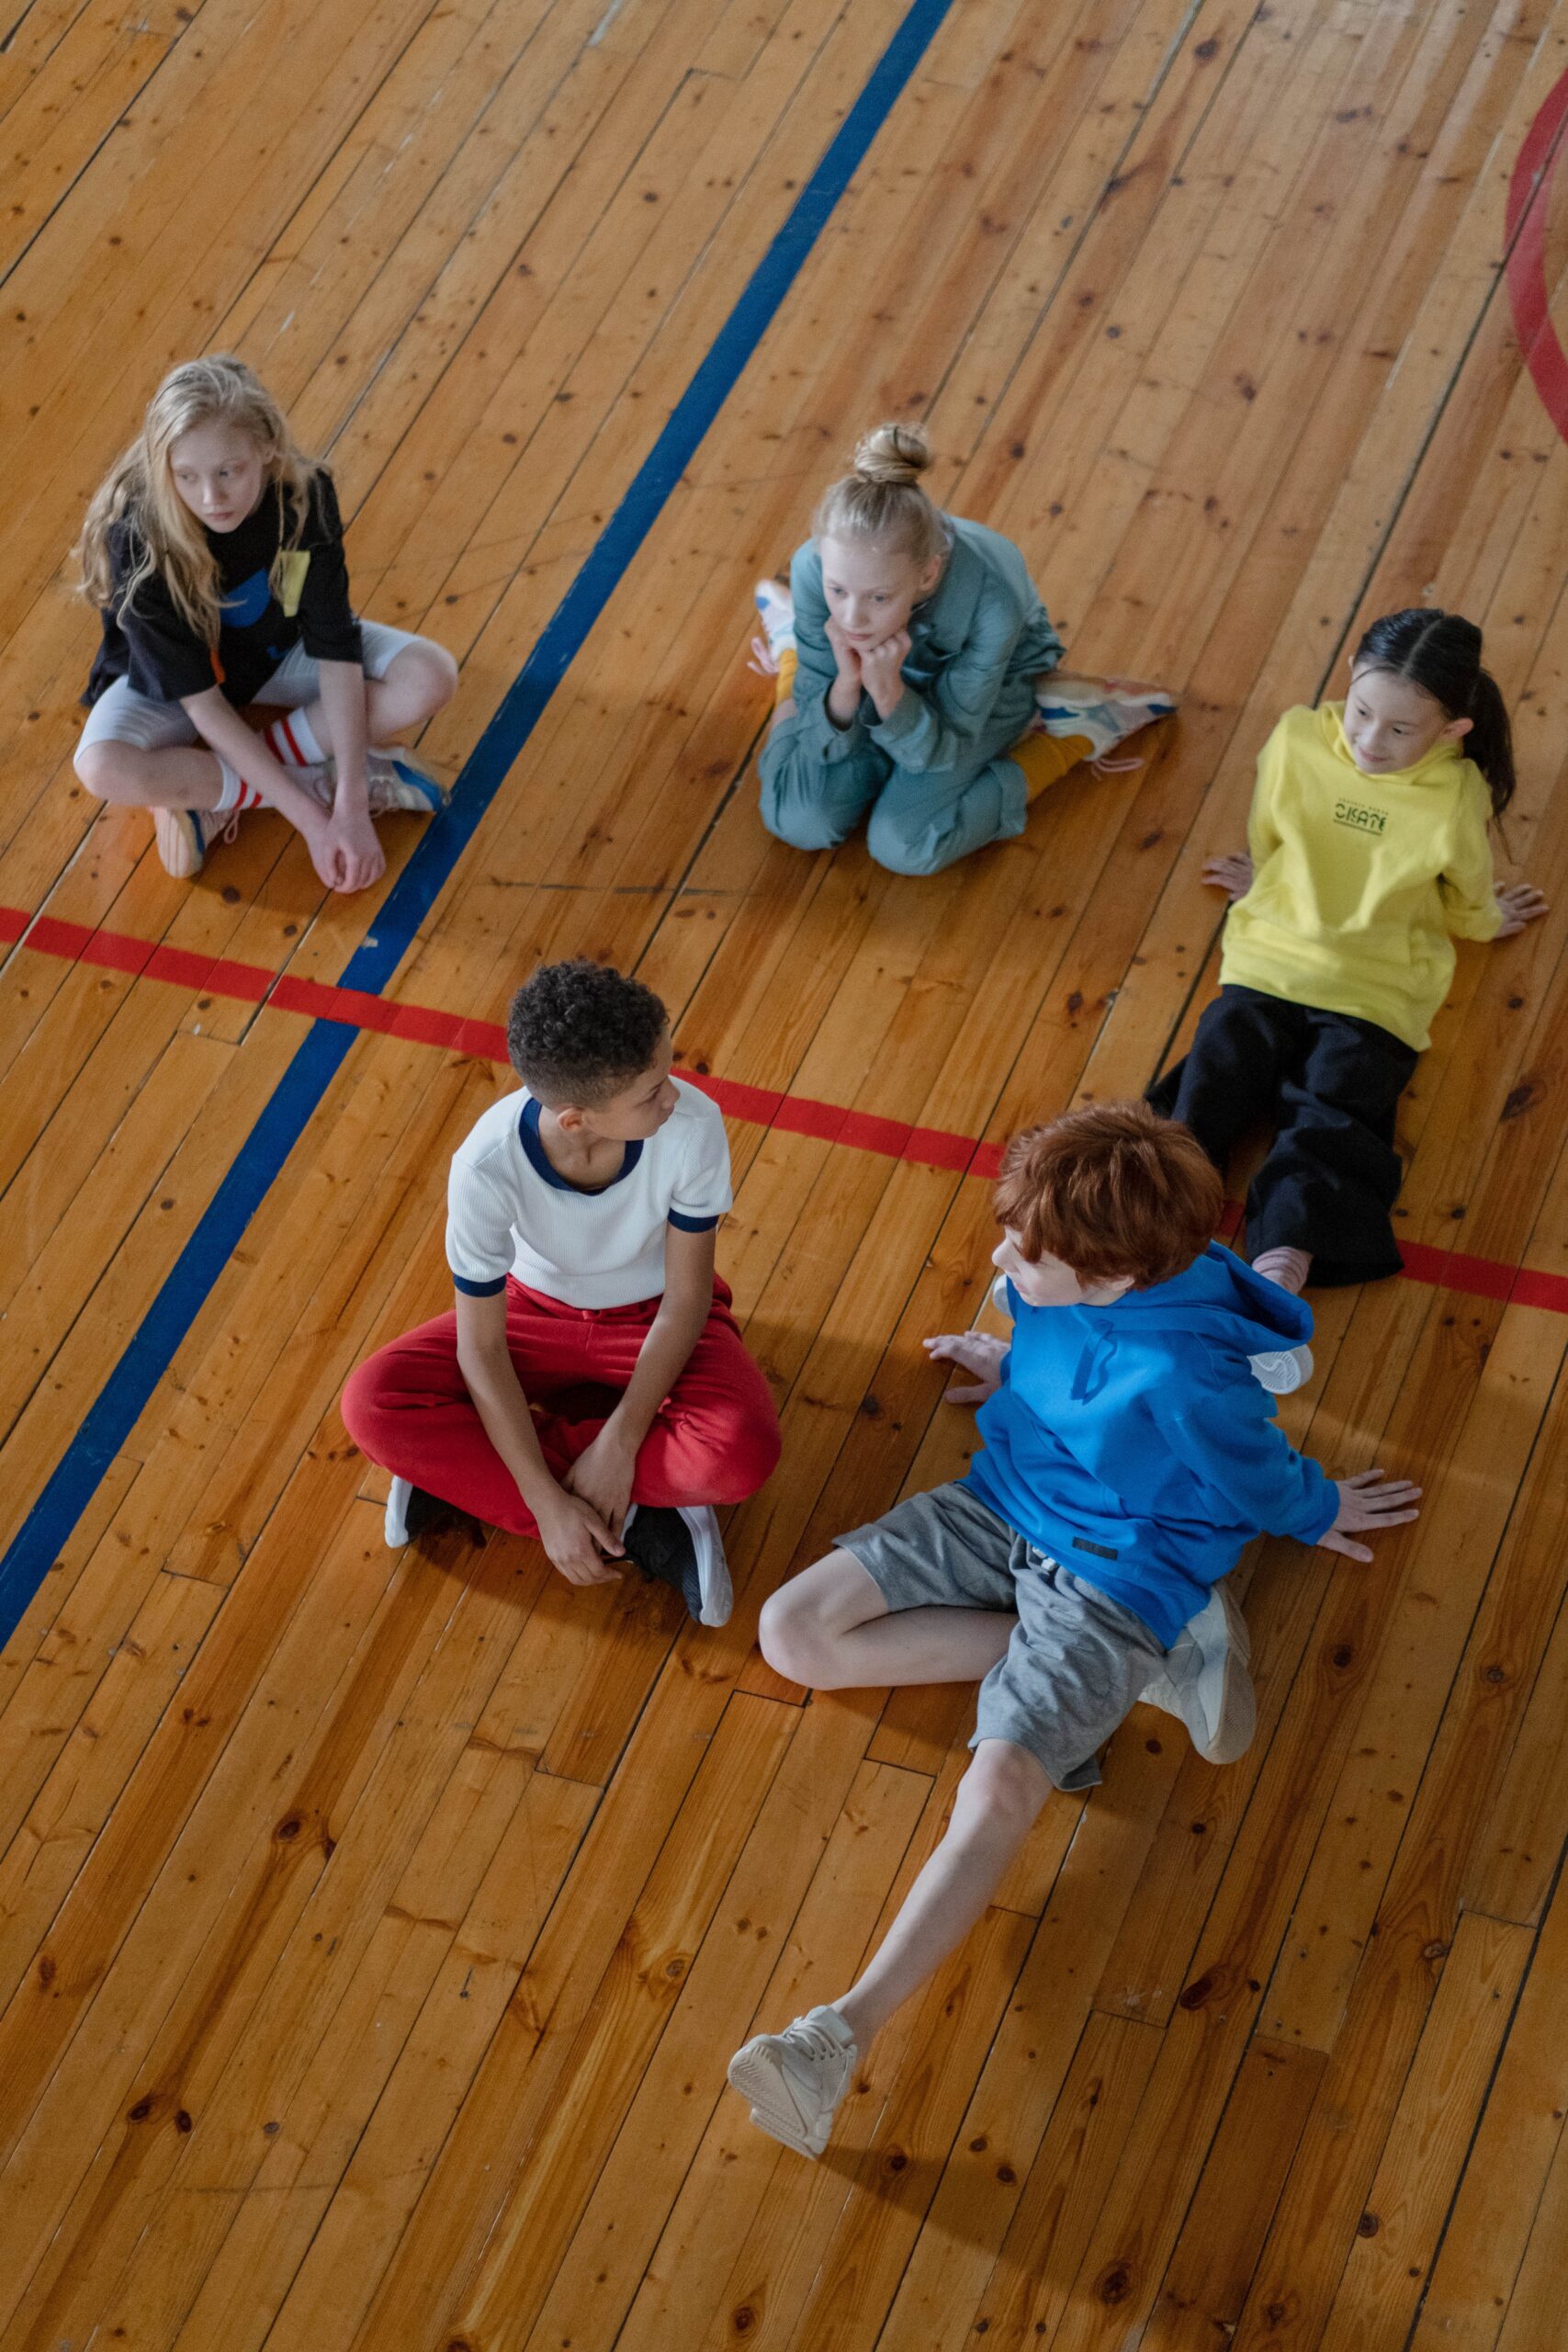 5 boys and girls sitting on a gymnasium floor